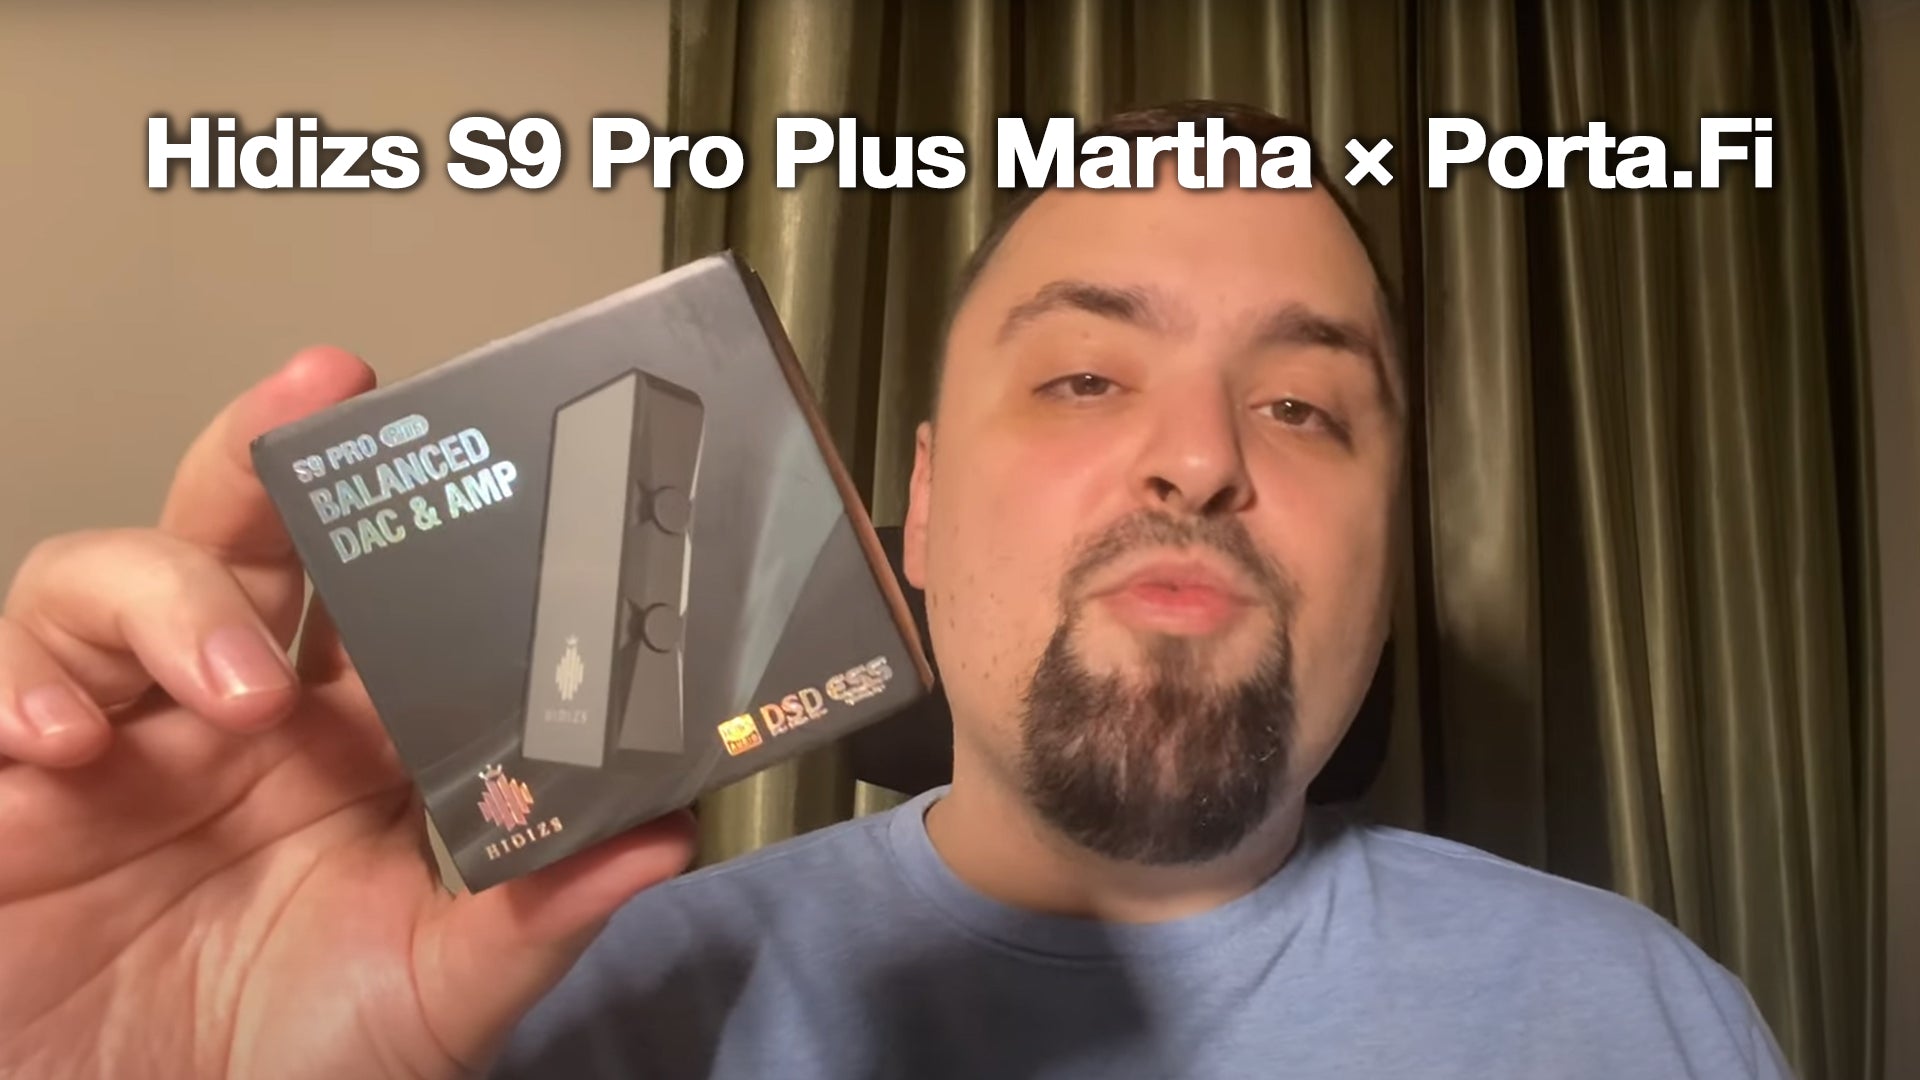 Hidizs S9 Pro Plus Martha Review - Porta.Fi